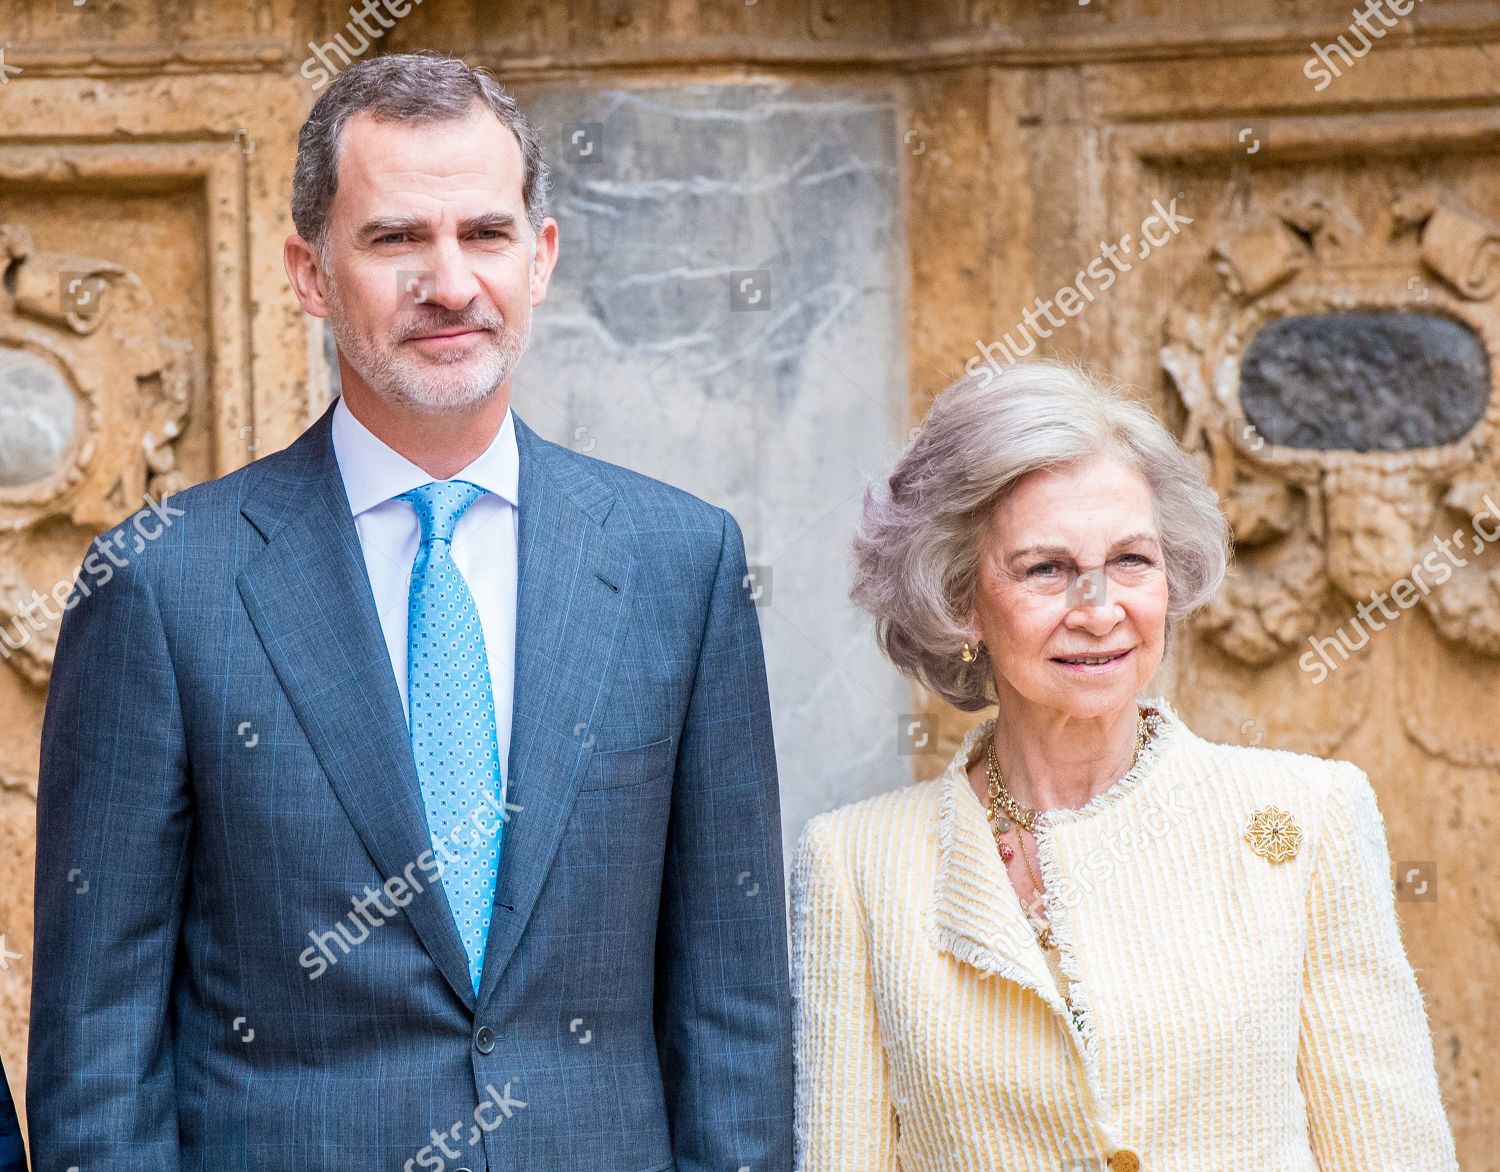 spanish-royal-family-attend-mass-palma-de-mallorca-spain-shutterstock-editorial-10215647j.jpg